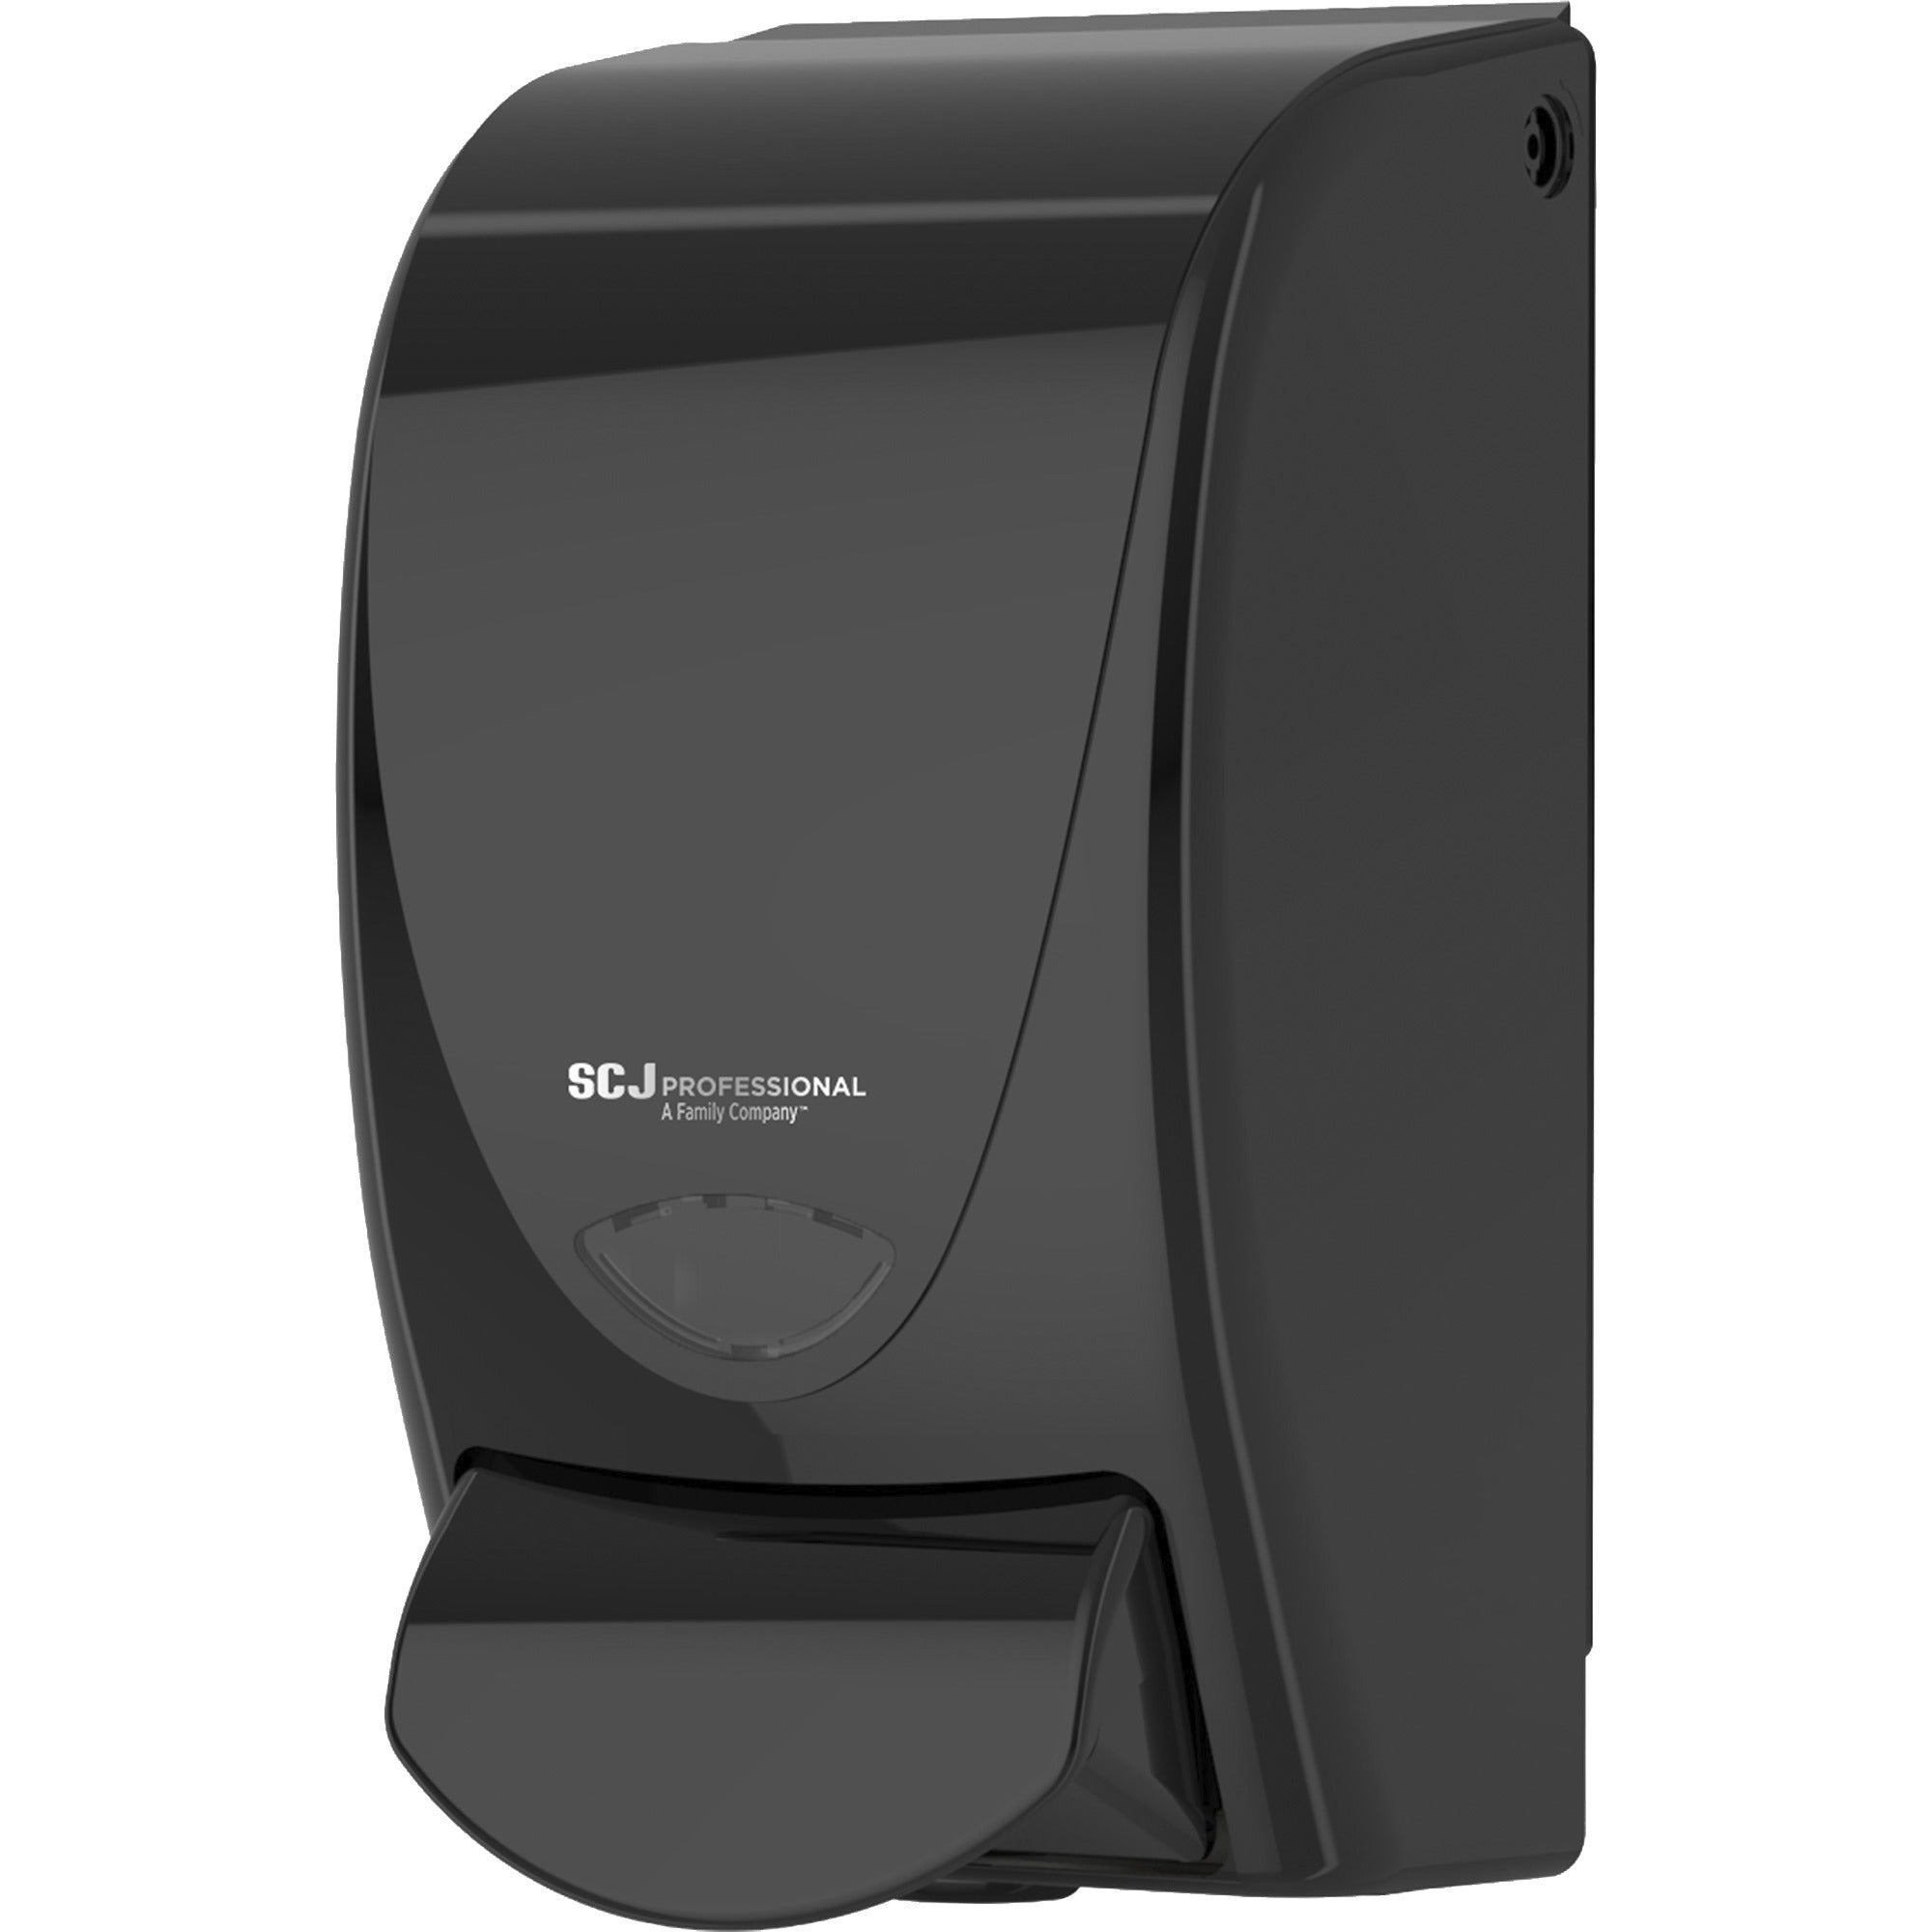 sc-johnson-proline-curve-manual-dispenser-manual-106-quart-capacity-durable-antimicrobial-anti-bacterial-black-1each_sjn91128 - 2